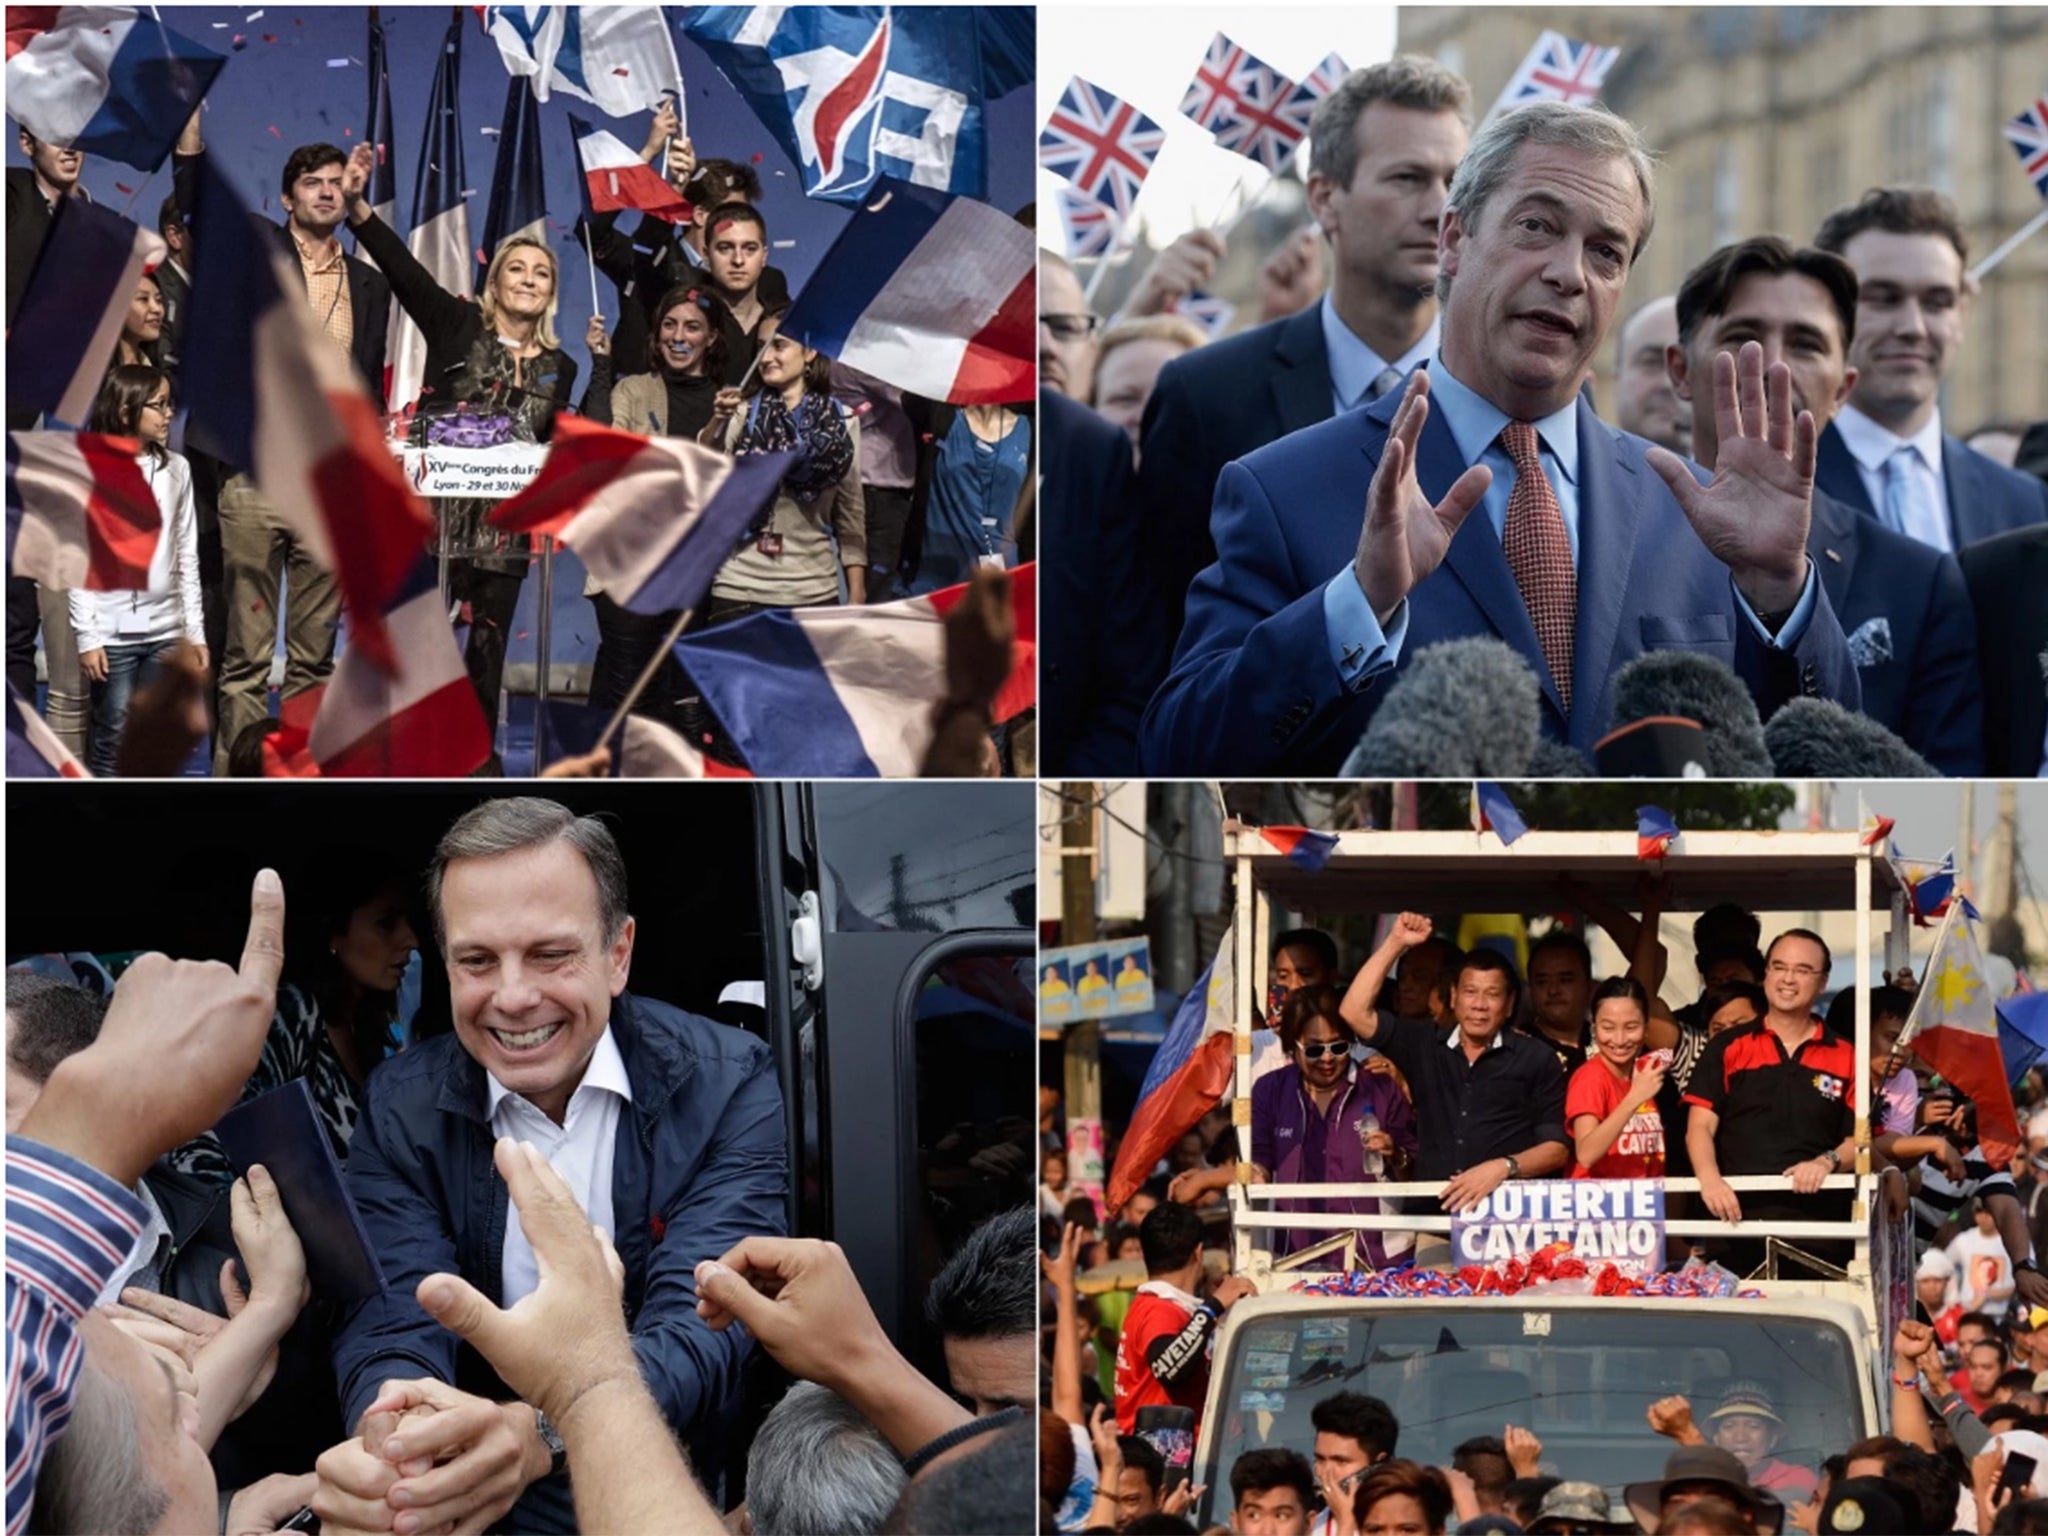 Marine Le Pen of France’s far-right National Front, Nigel Farage of UKIP and Brexit campaigner, Rodrigo Duterte of the Philippines and Sao Paulo Mayor João Doria